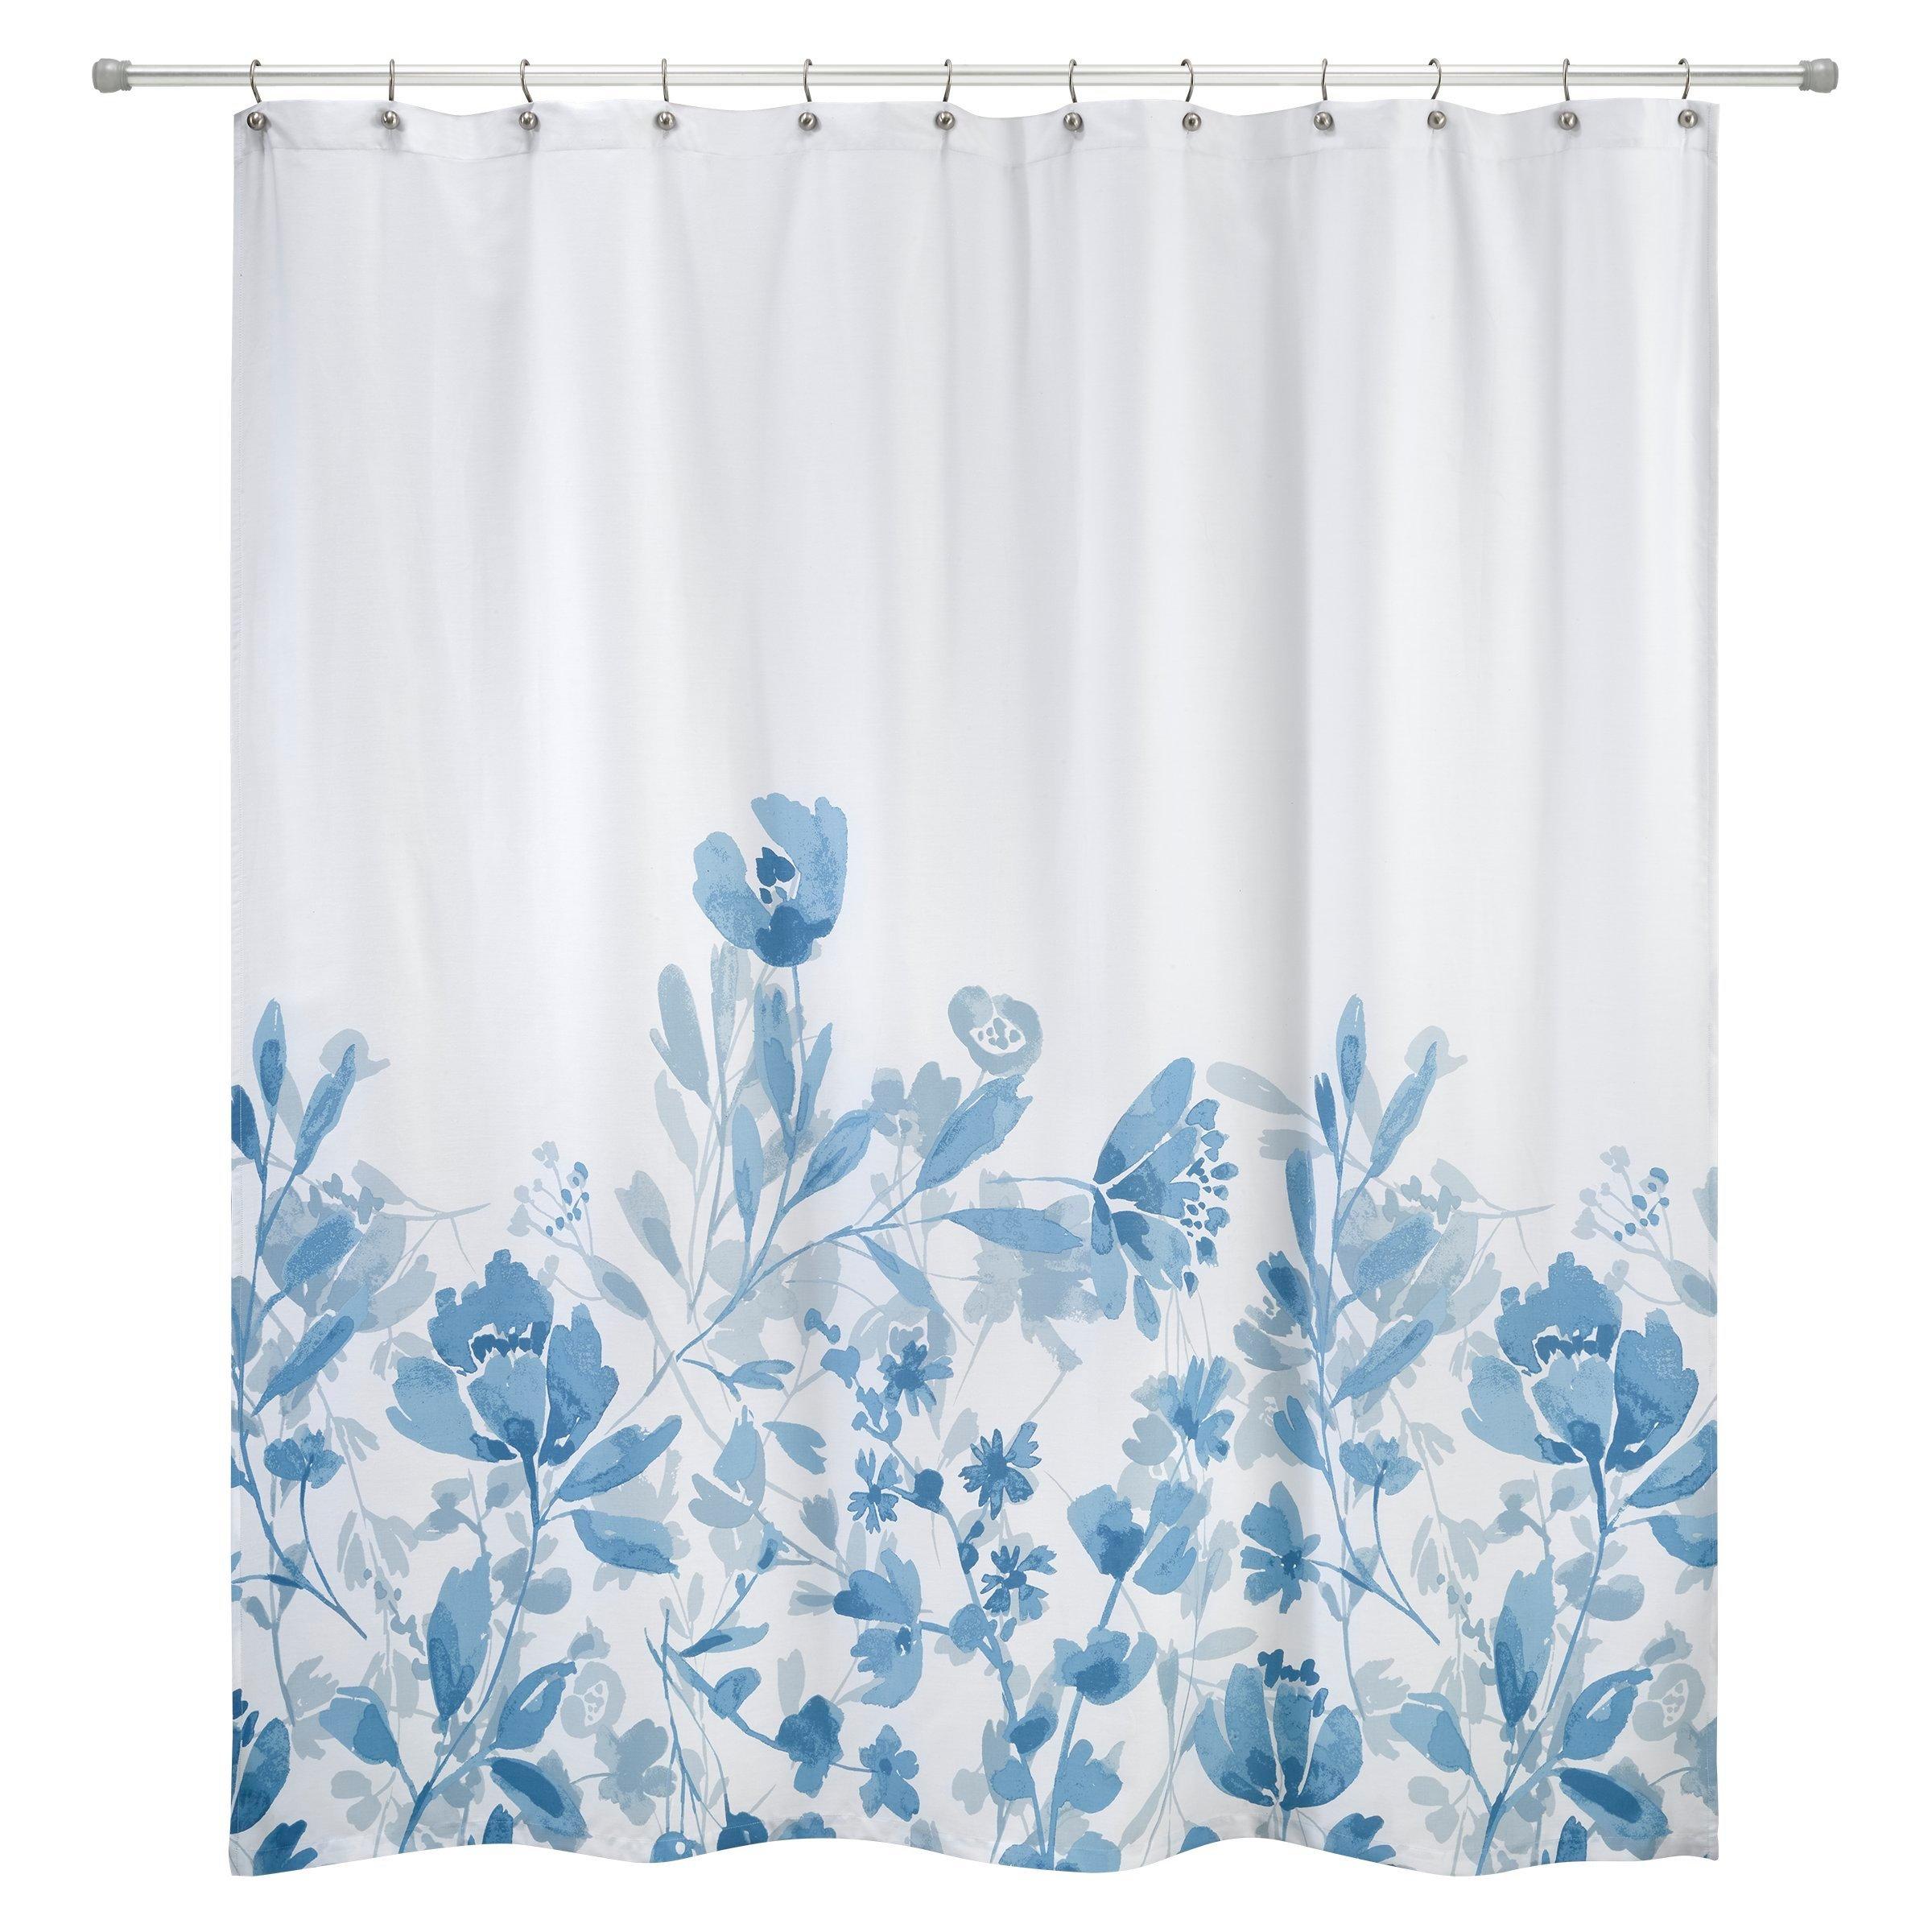 Avanti Izod Mystic Floral Shower Curtain